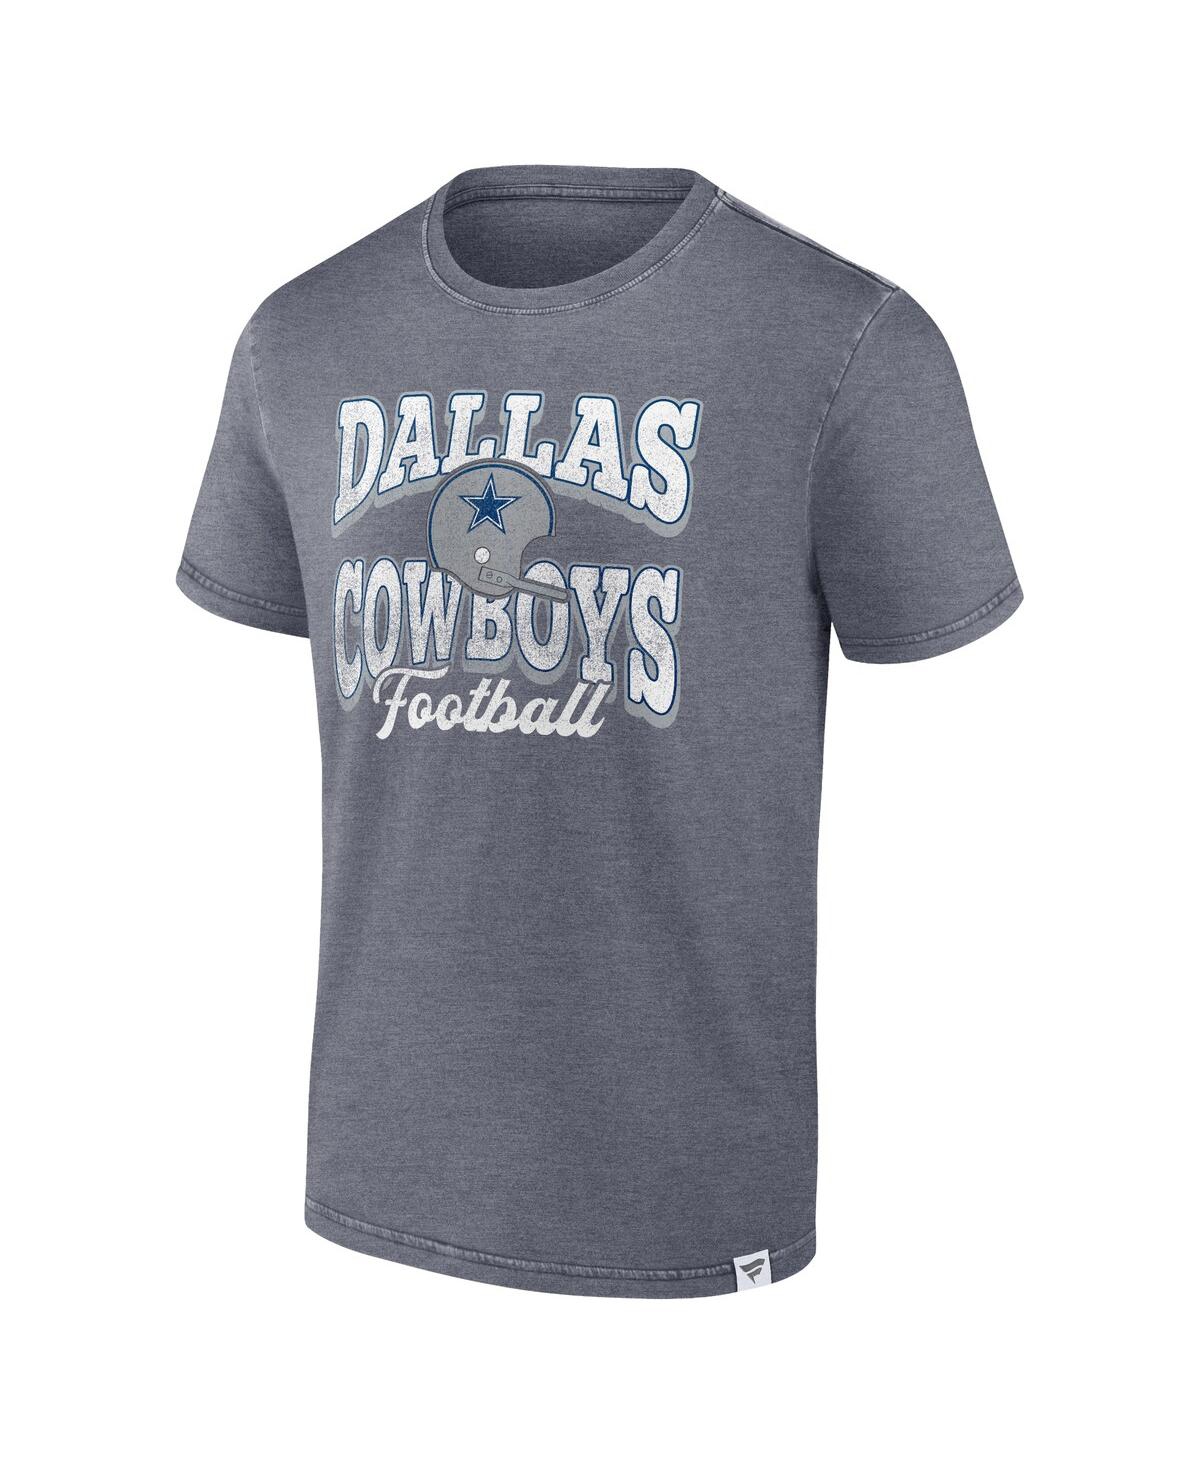 Shop Fanatics Men's  Heather Navy Distressed Dallas Cowboys Force Out T-shirt